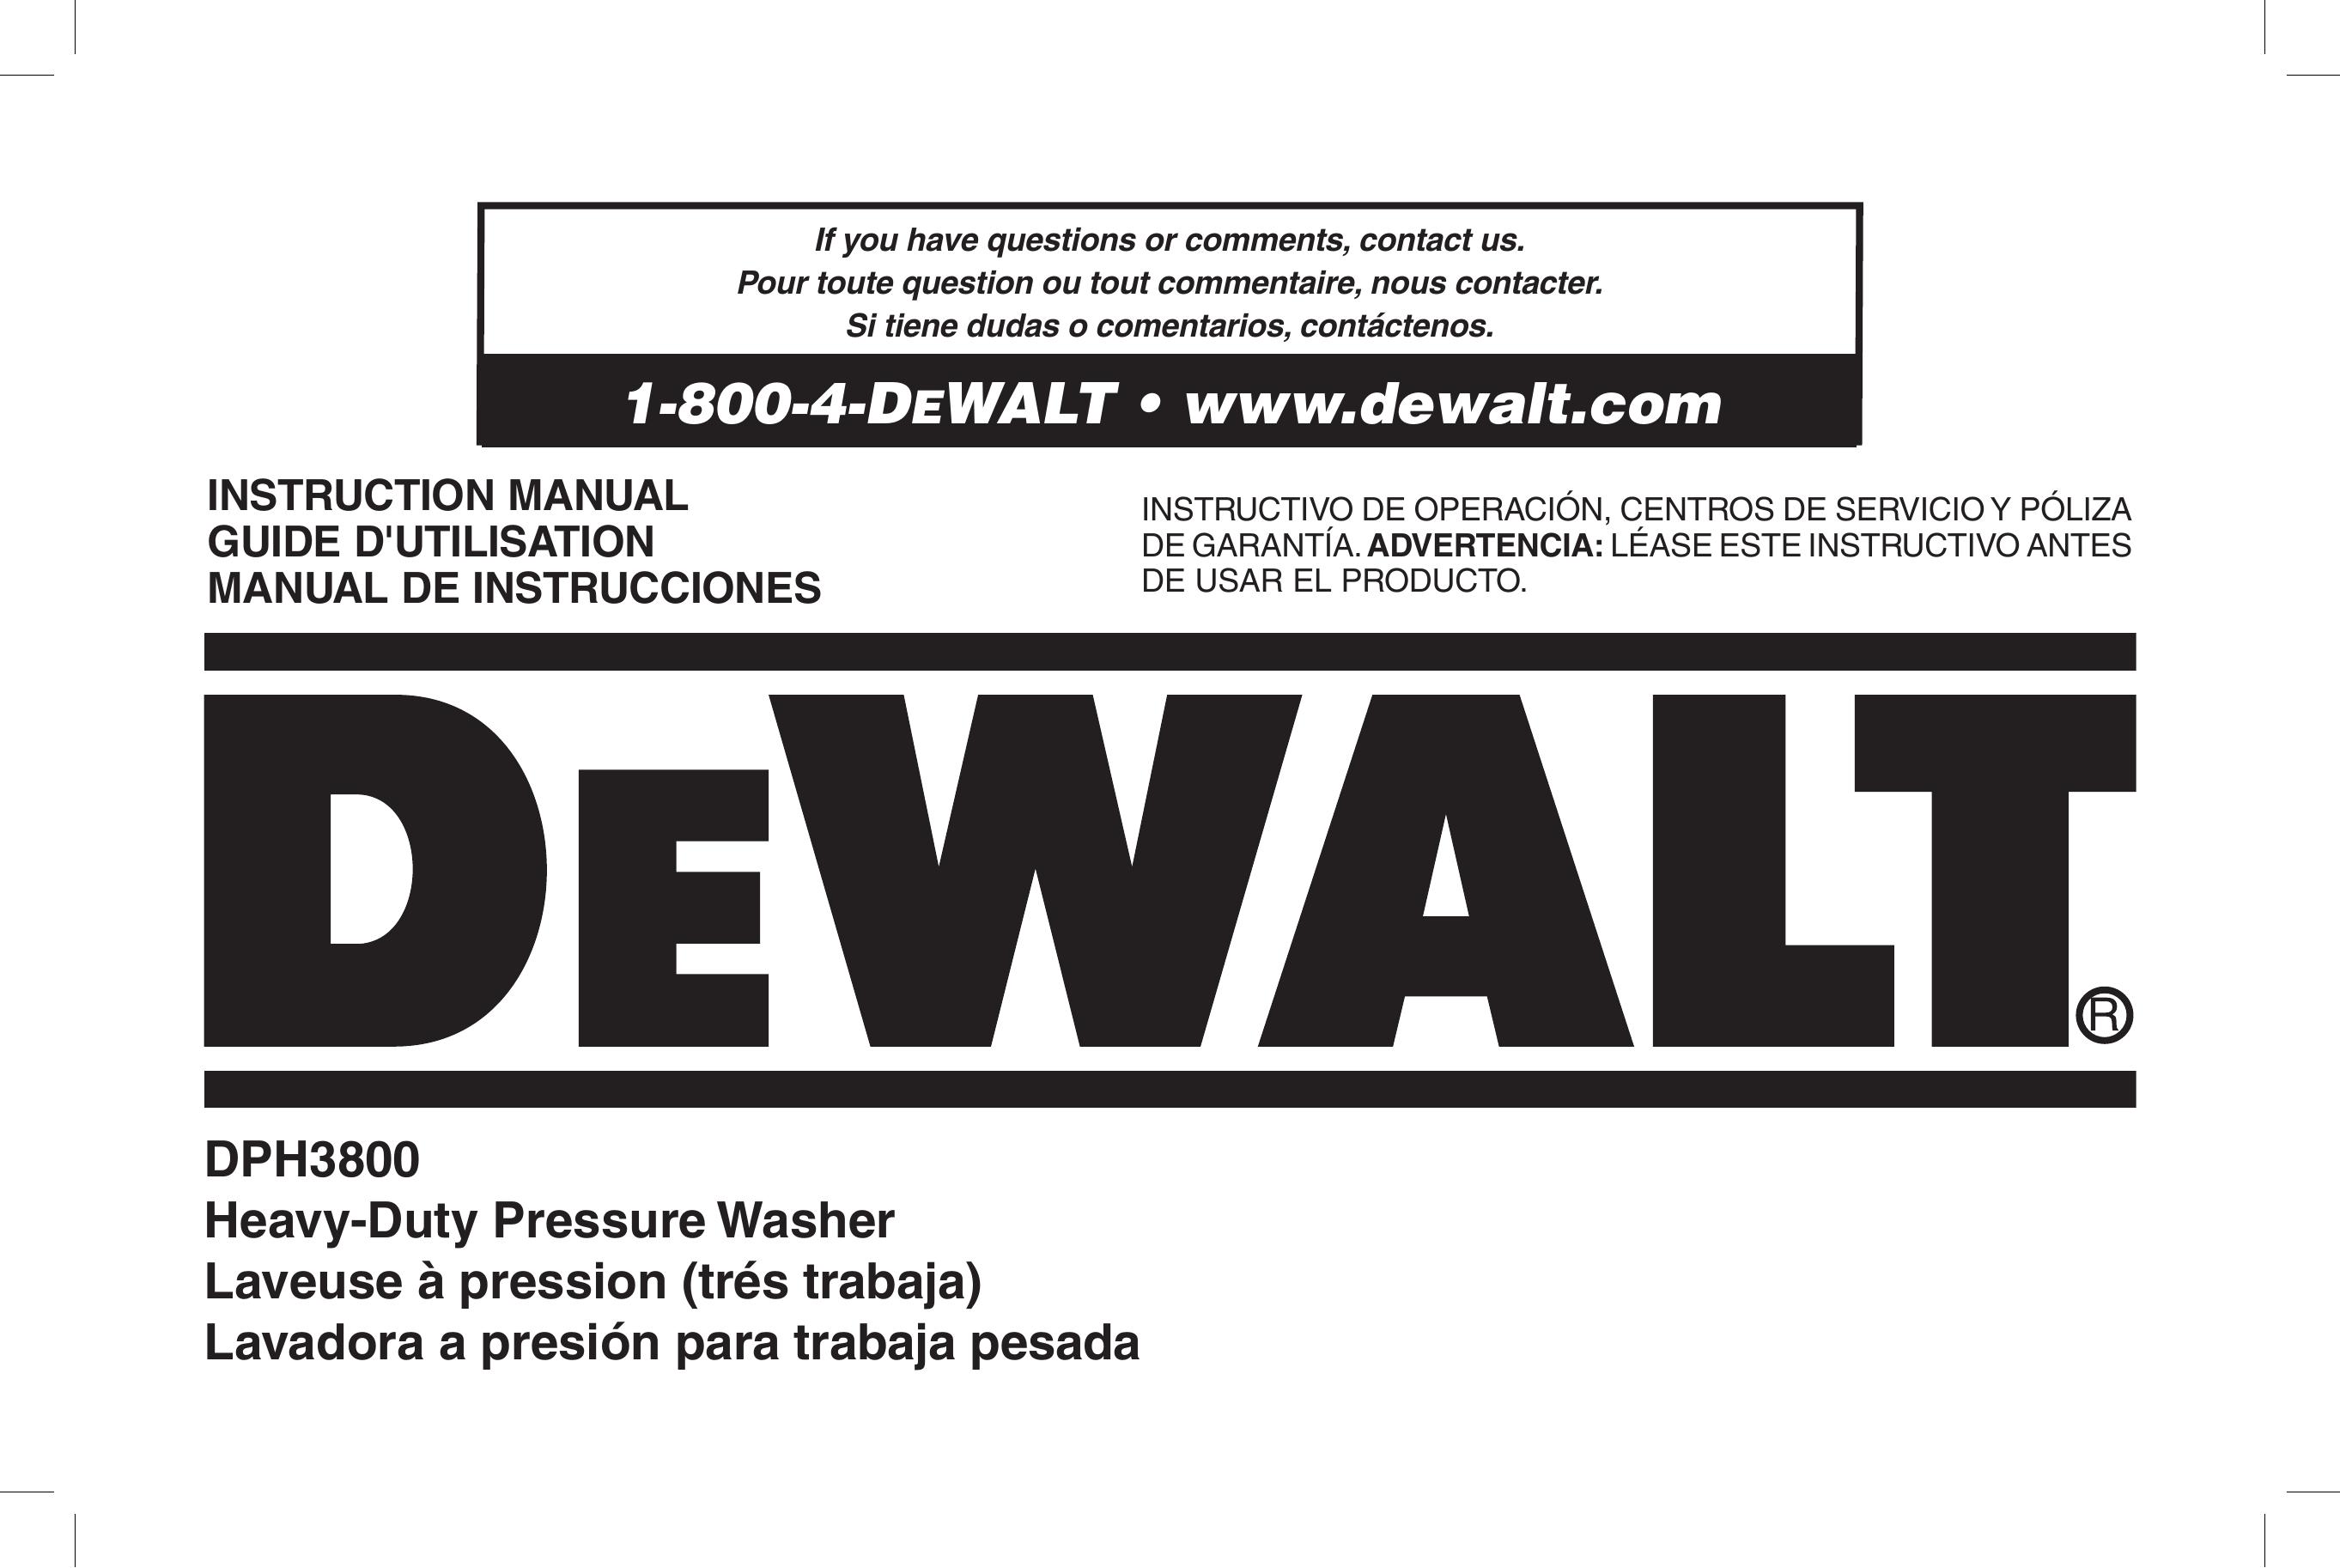 DeWalt N000589 Pressure Washer User Manual